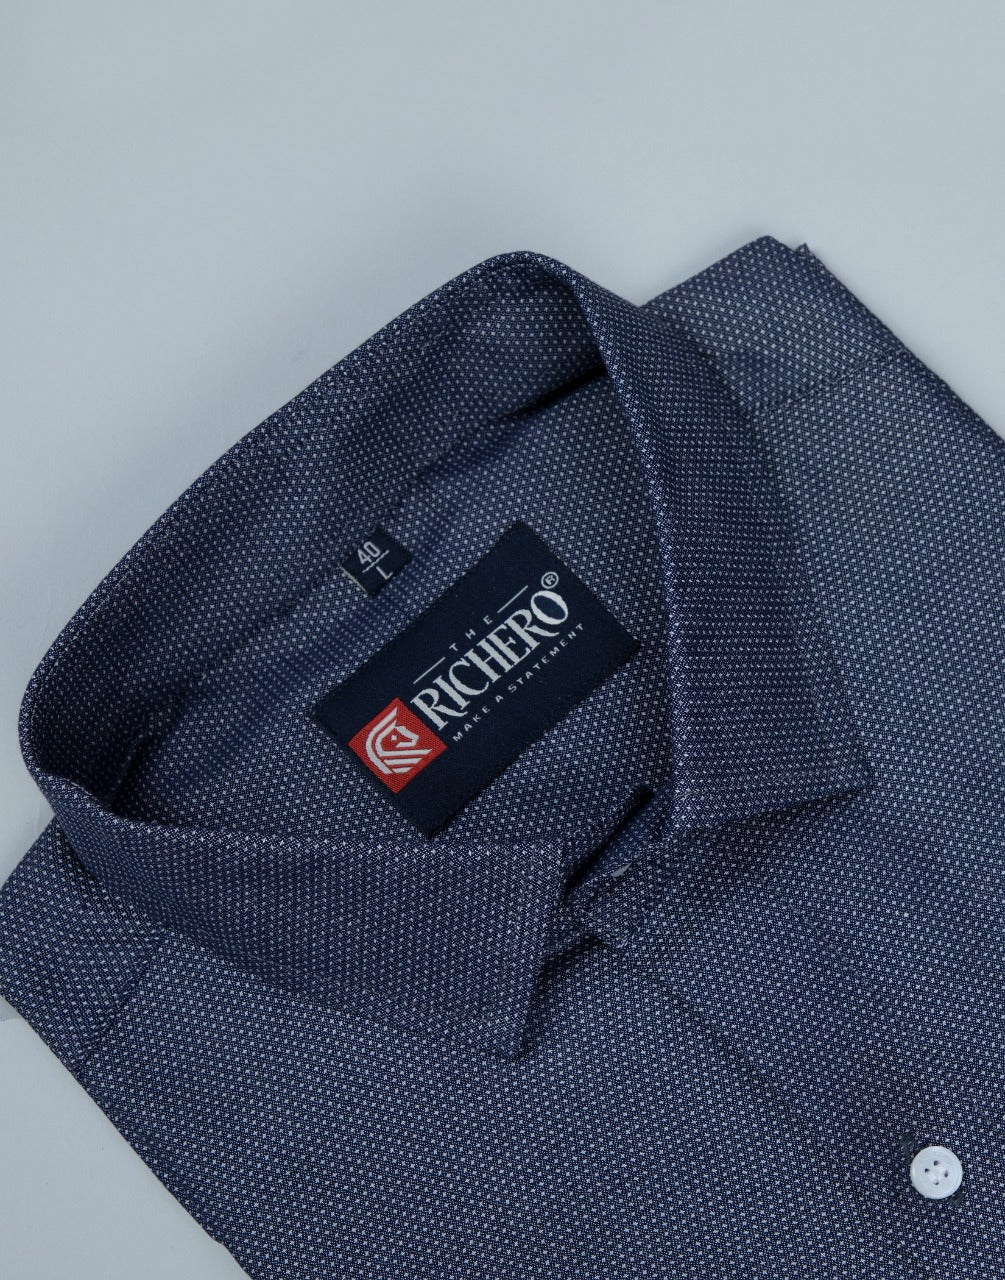 Blue color micro design formal shirt